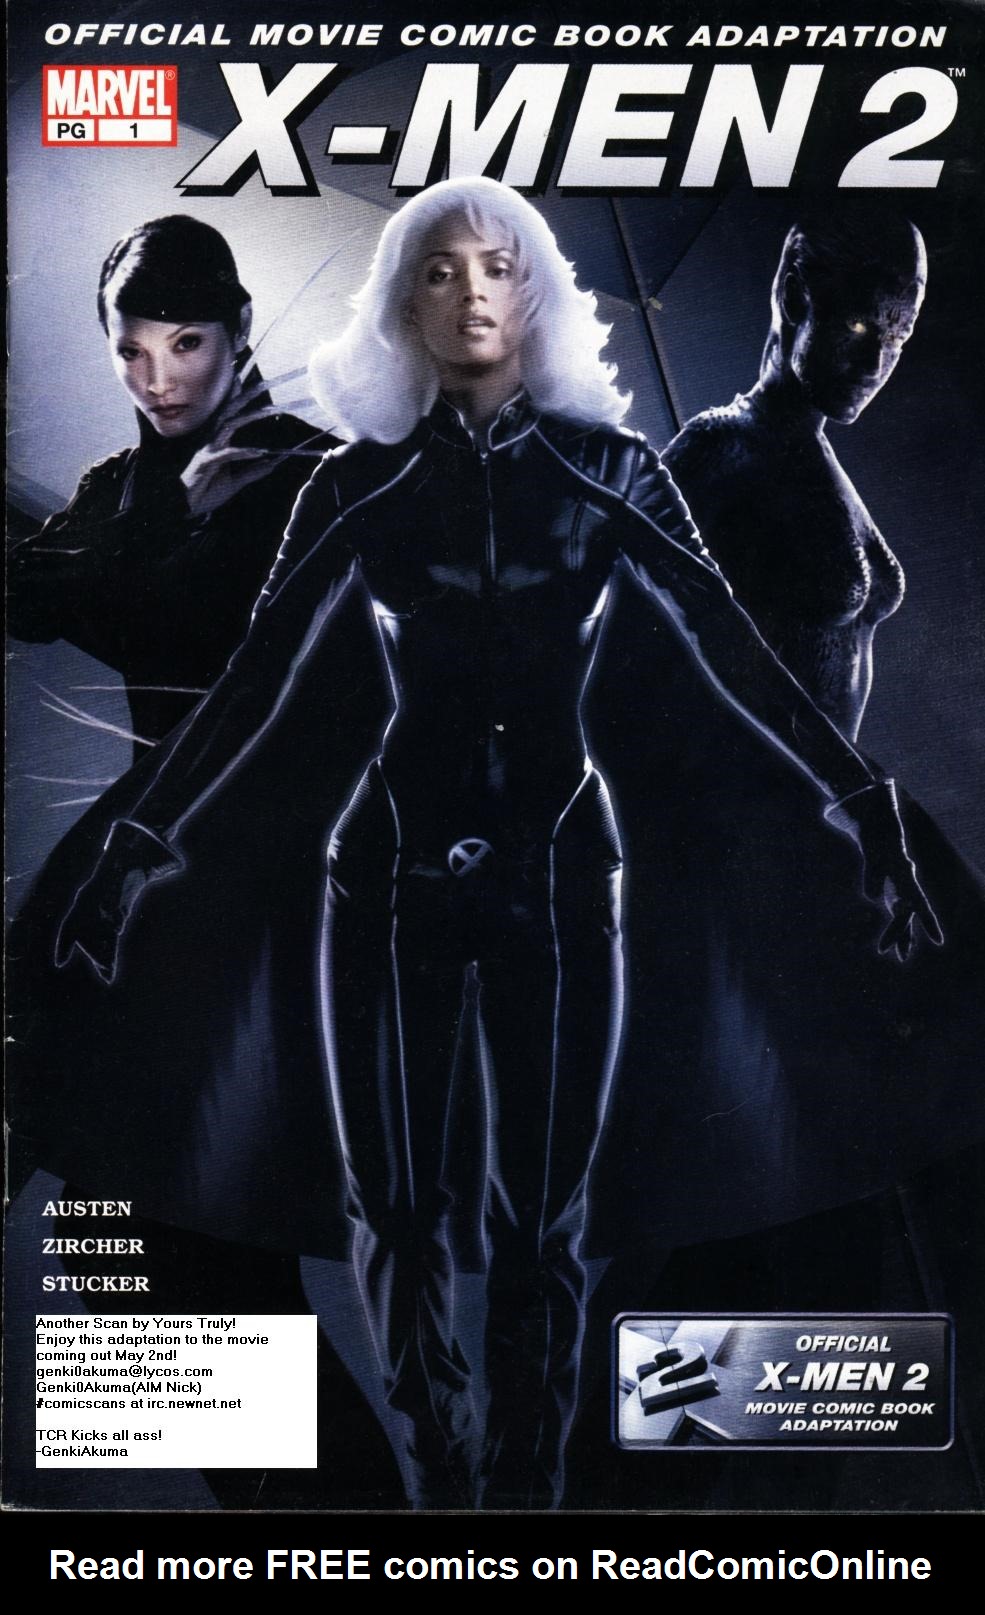 Read online X-Men 2 Movie comic -  Issue # Full - 1